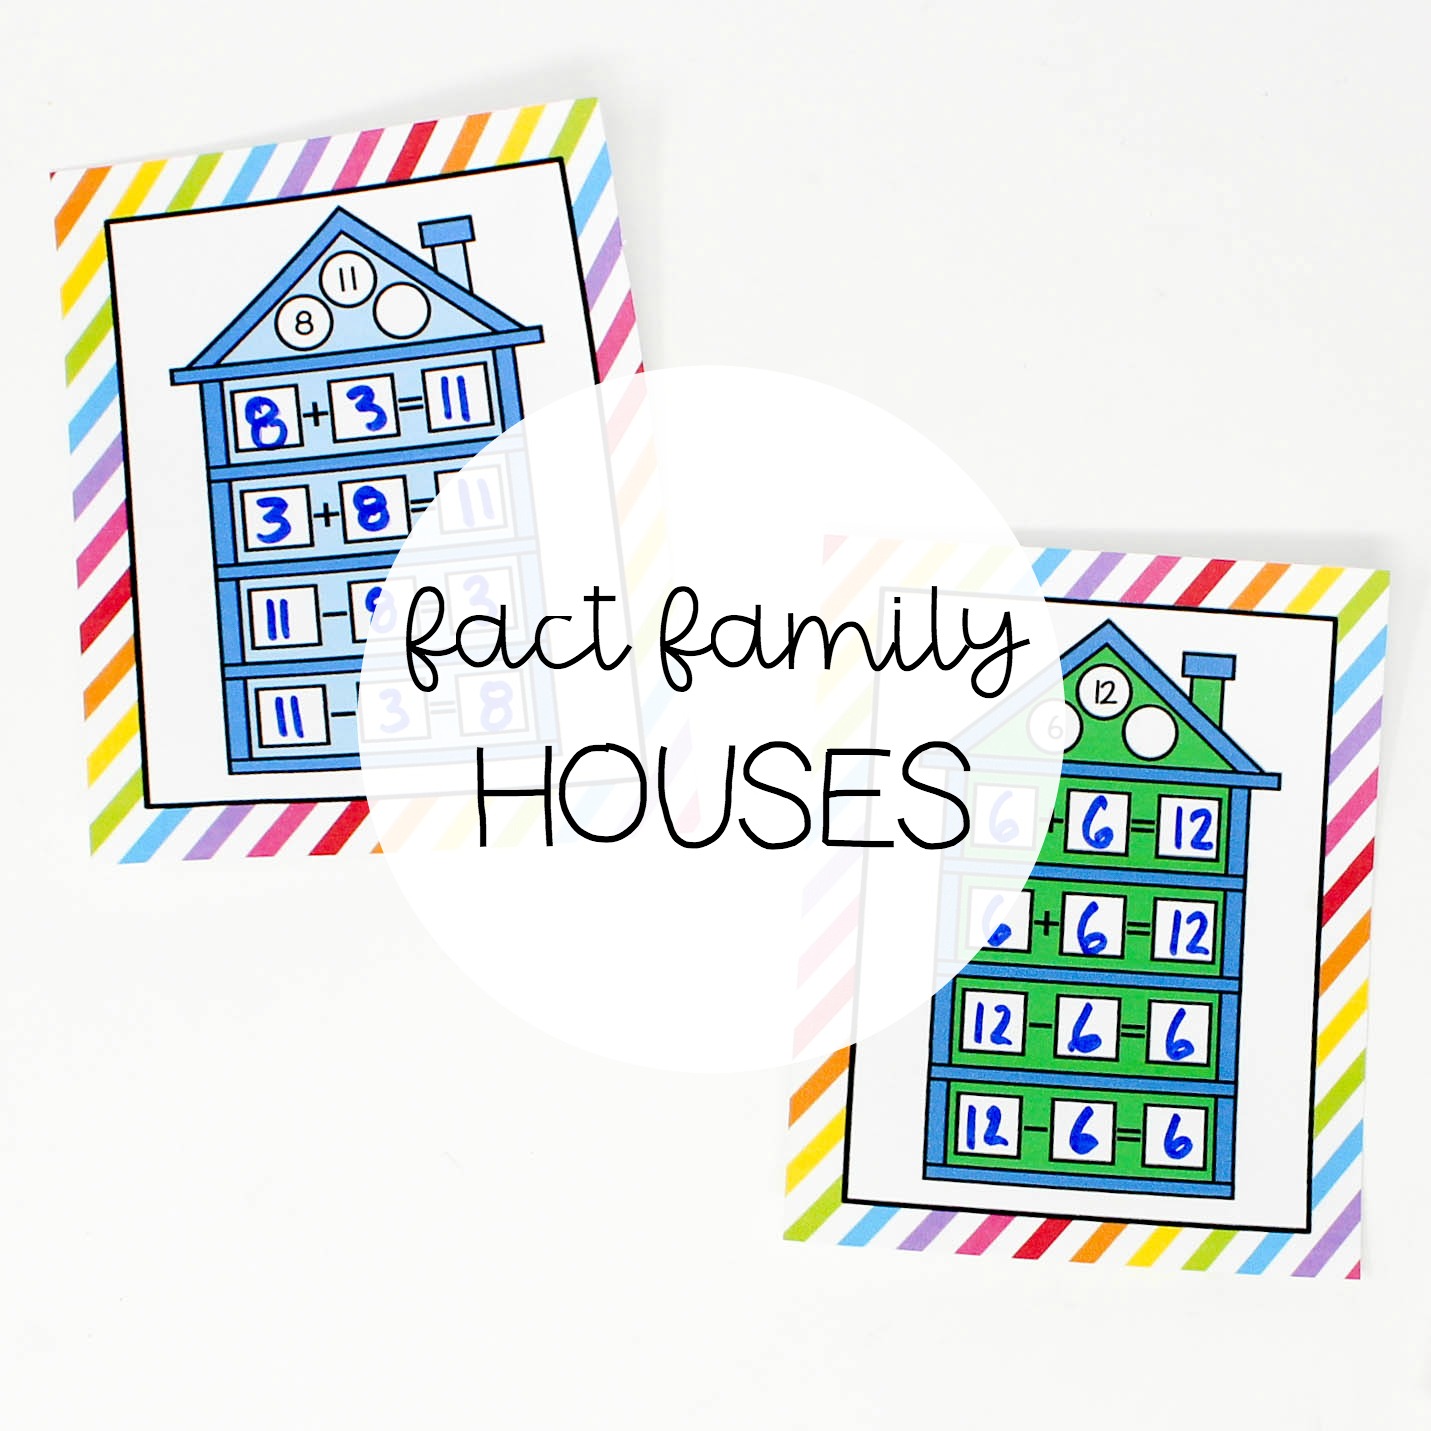 Fact Family Houses